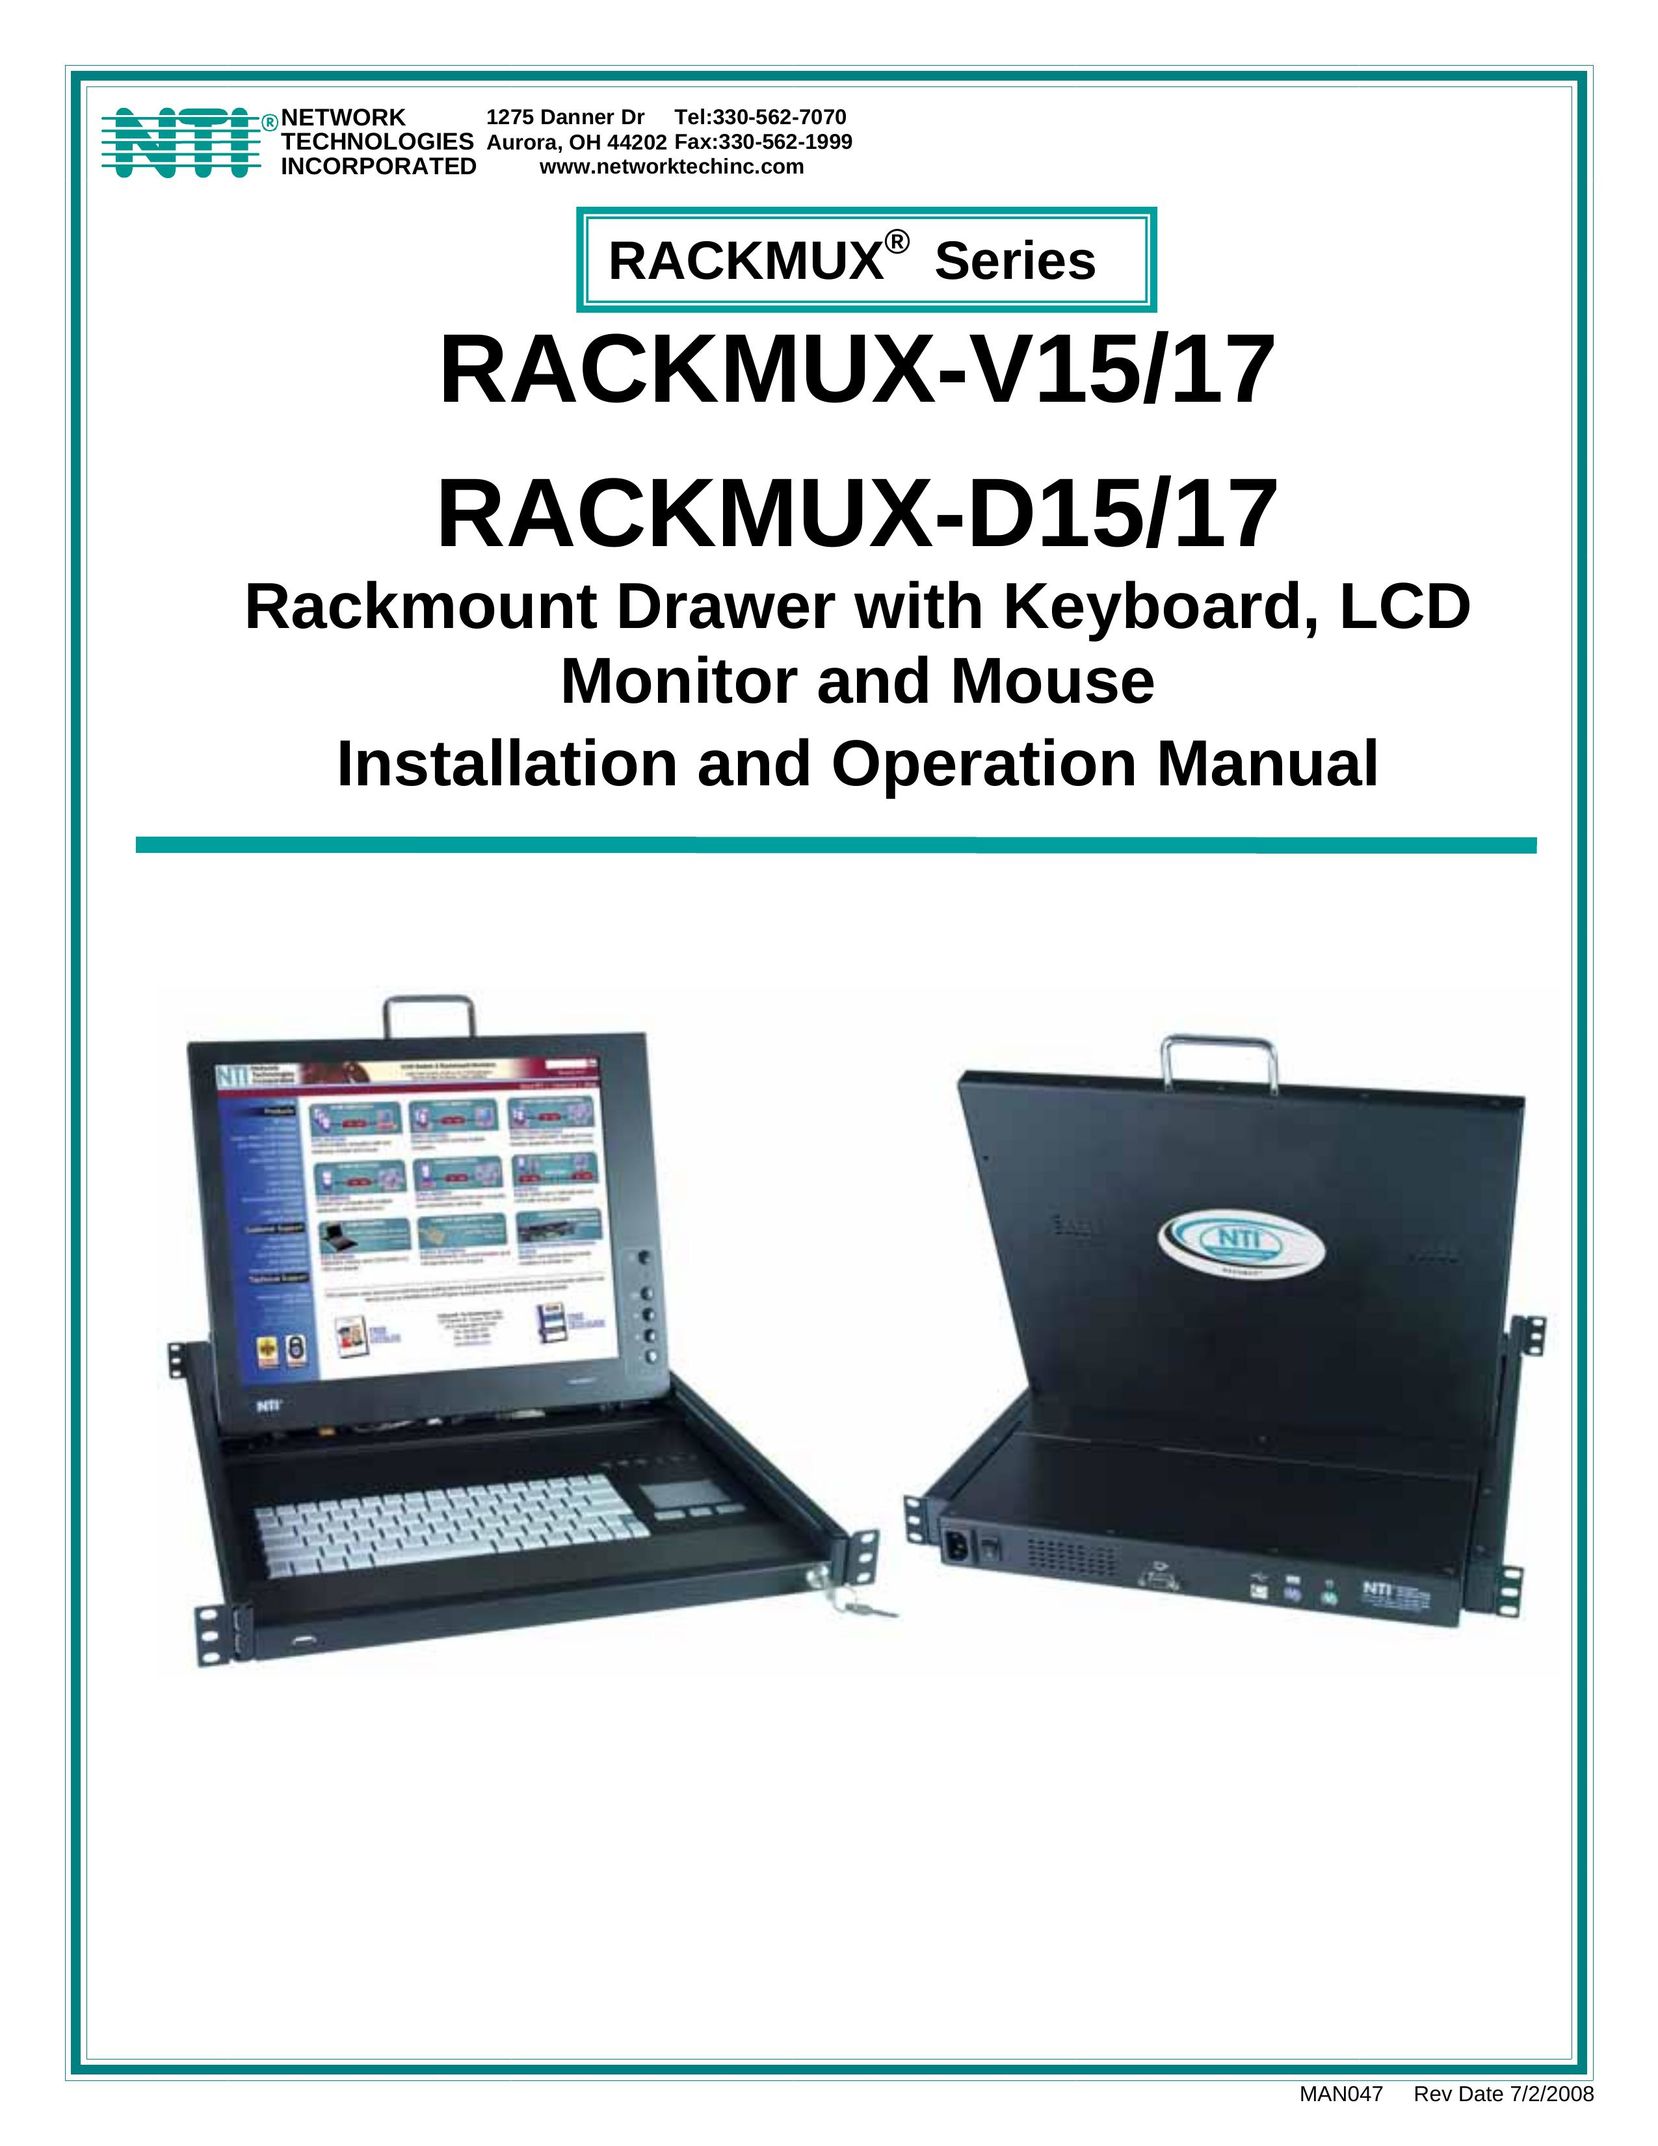 Network Technologies Rackmux-D15/17 Laptop User Manual